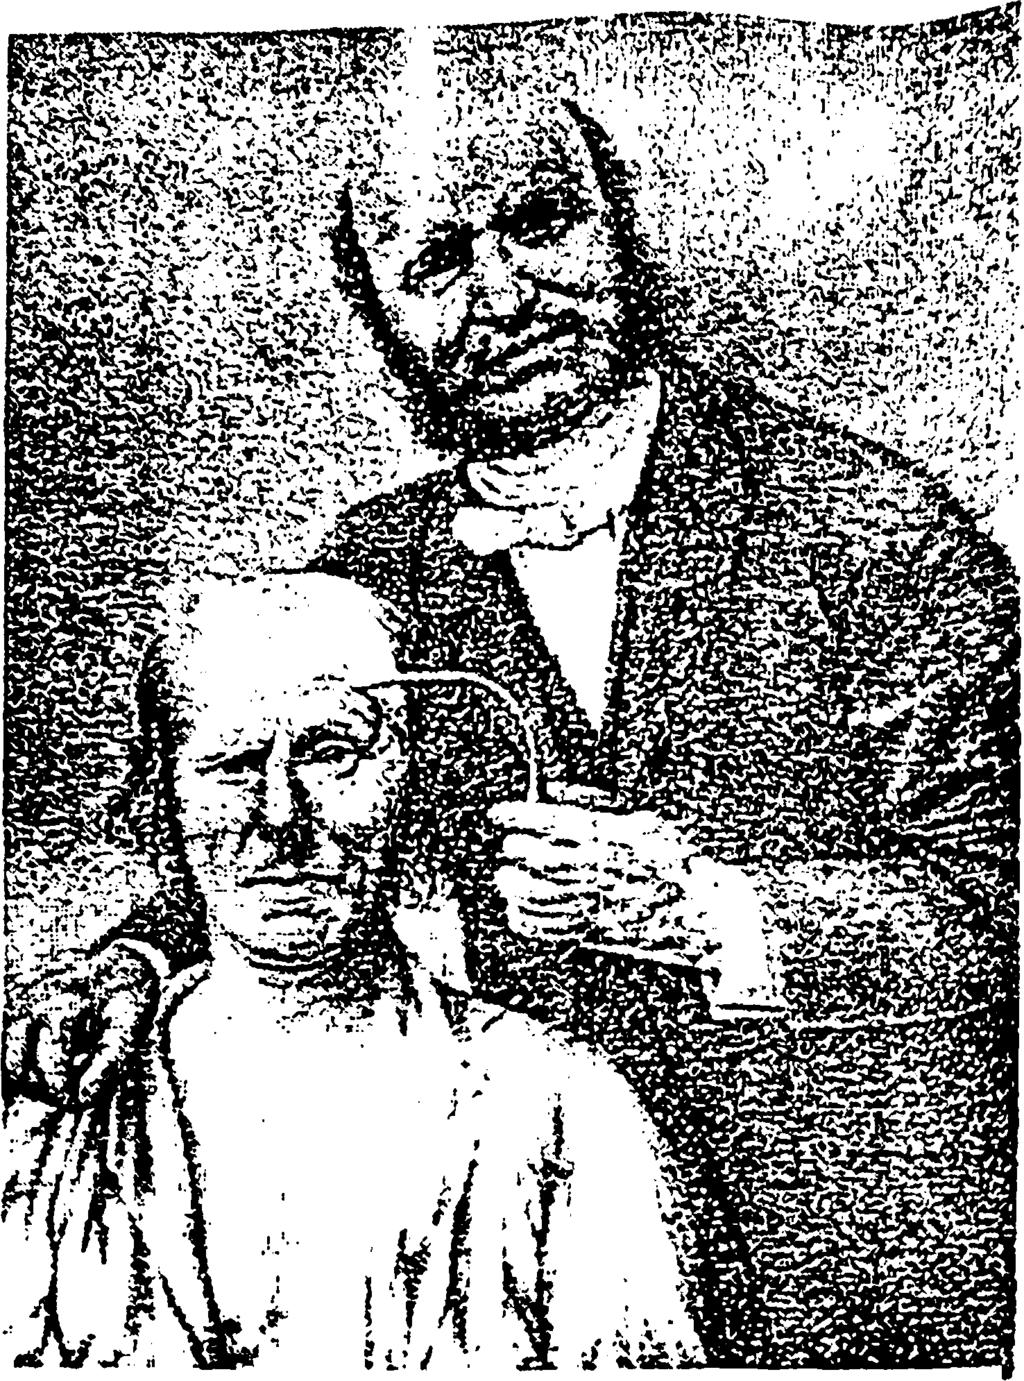 -7- O Etienne Jules Marey (1830-1904), ένας Γάλλος φυσιολόγος και ο μαθητής του Gaston Carlet (1845-1892) μελέτησαν την επαφή του πέλματος με το έδαφος χρησιμοποιώντας υποδήματα ευαίσθητα στην πίεση